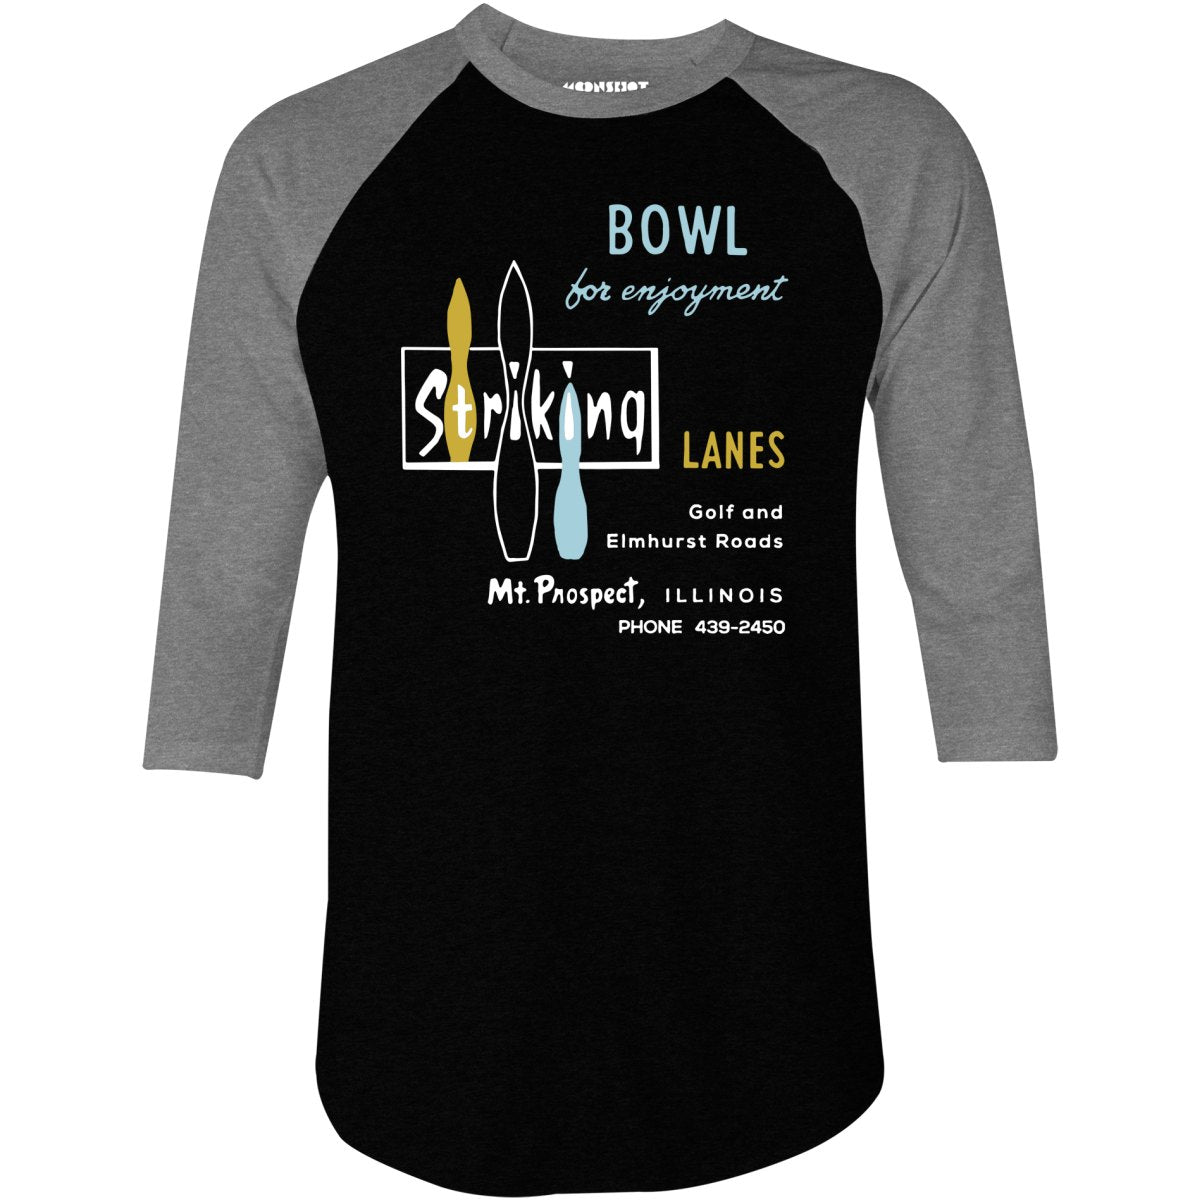 Striking Lanes - Mt. Prospect, IL - Vintage Bowling Alley - 3/4 Sleeve Raglan T-Shirt